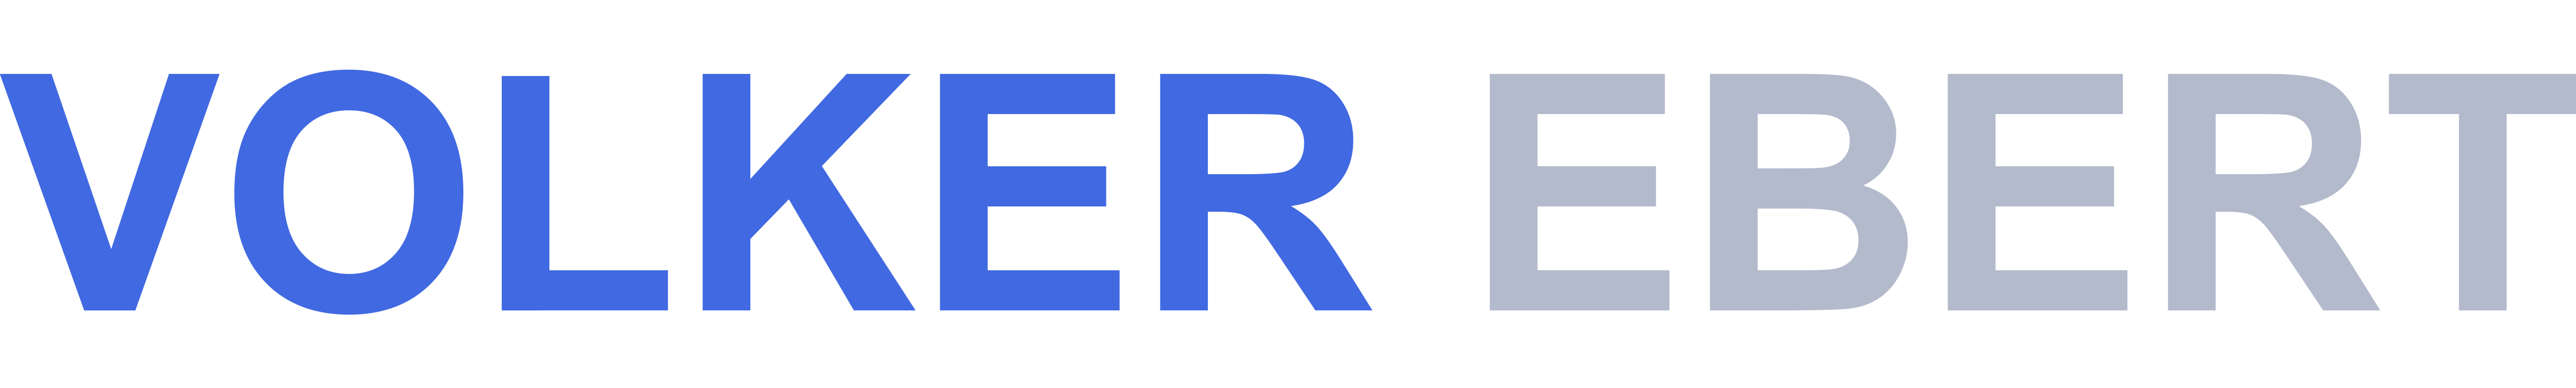 Volker Ebert Logo Namenszug